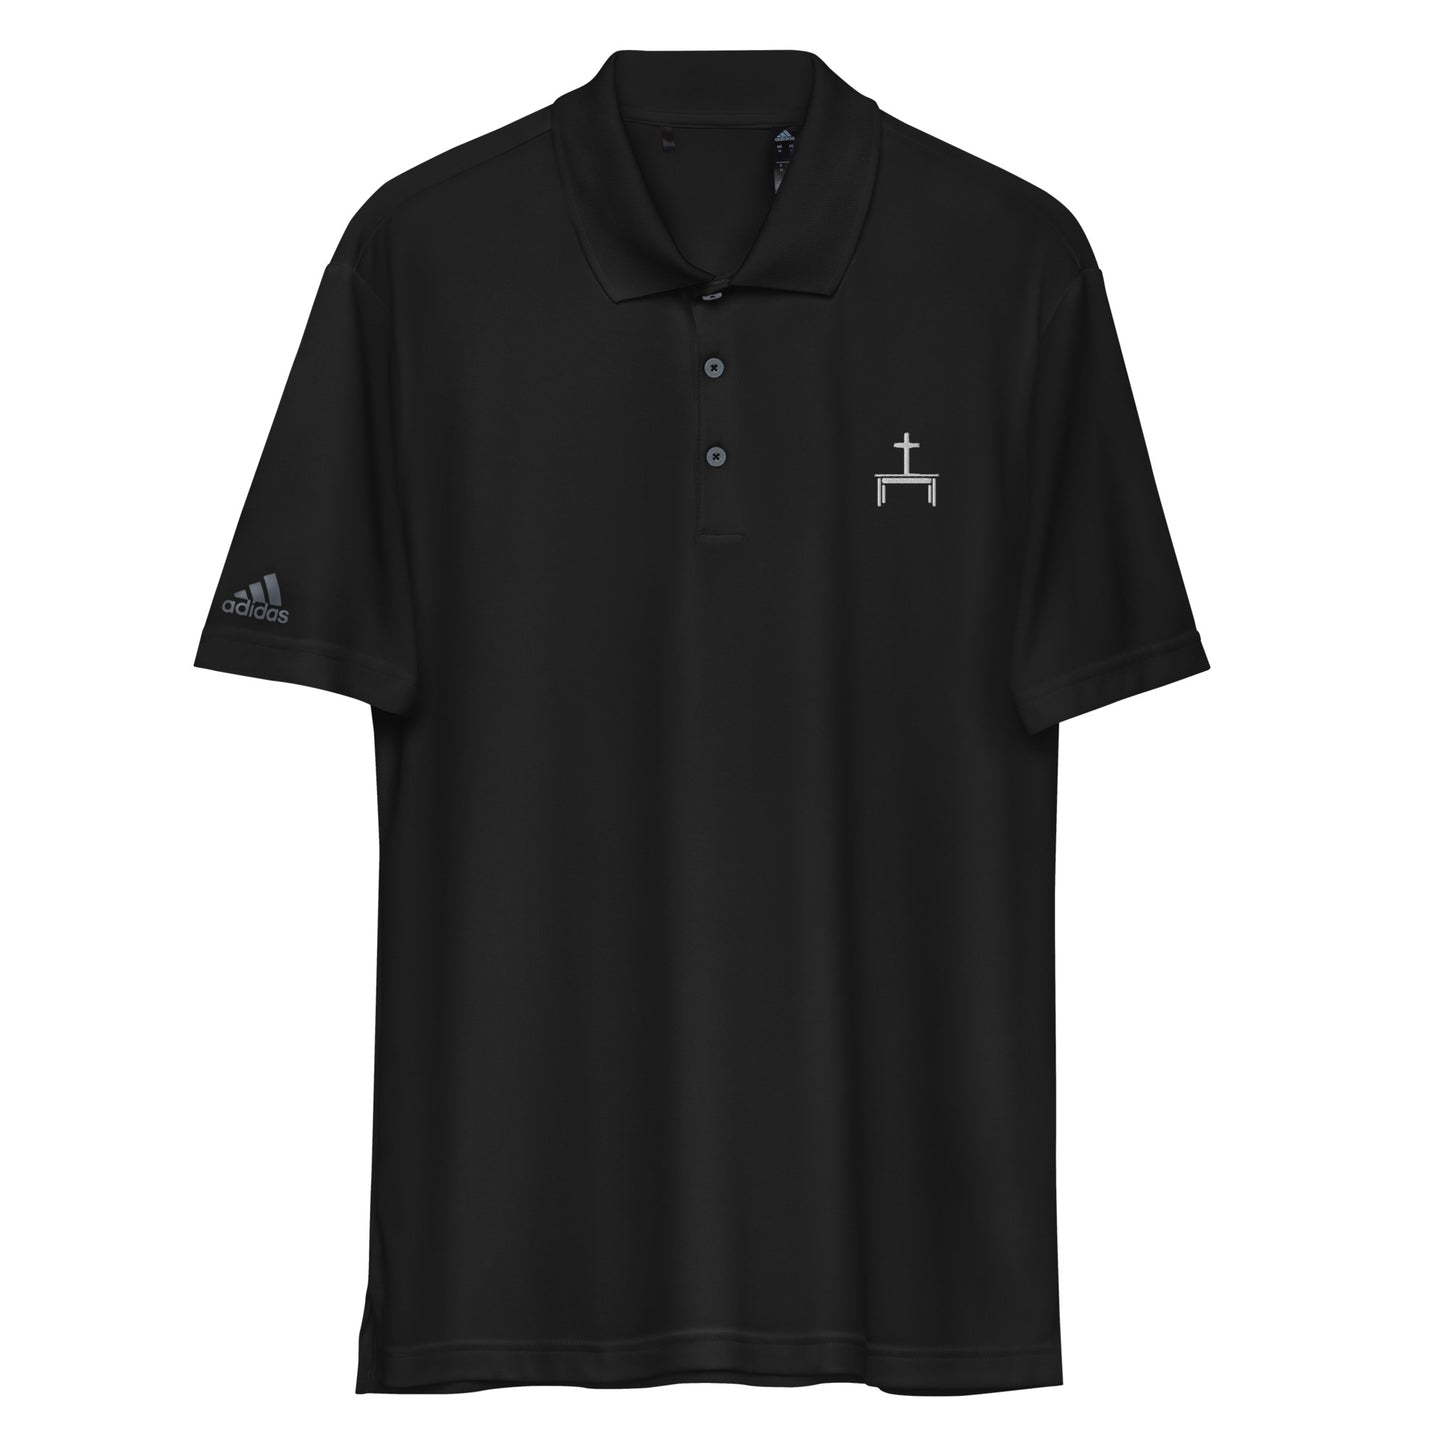 Kindred Logo - Men's Adidas Polo Shirt